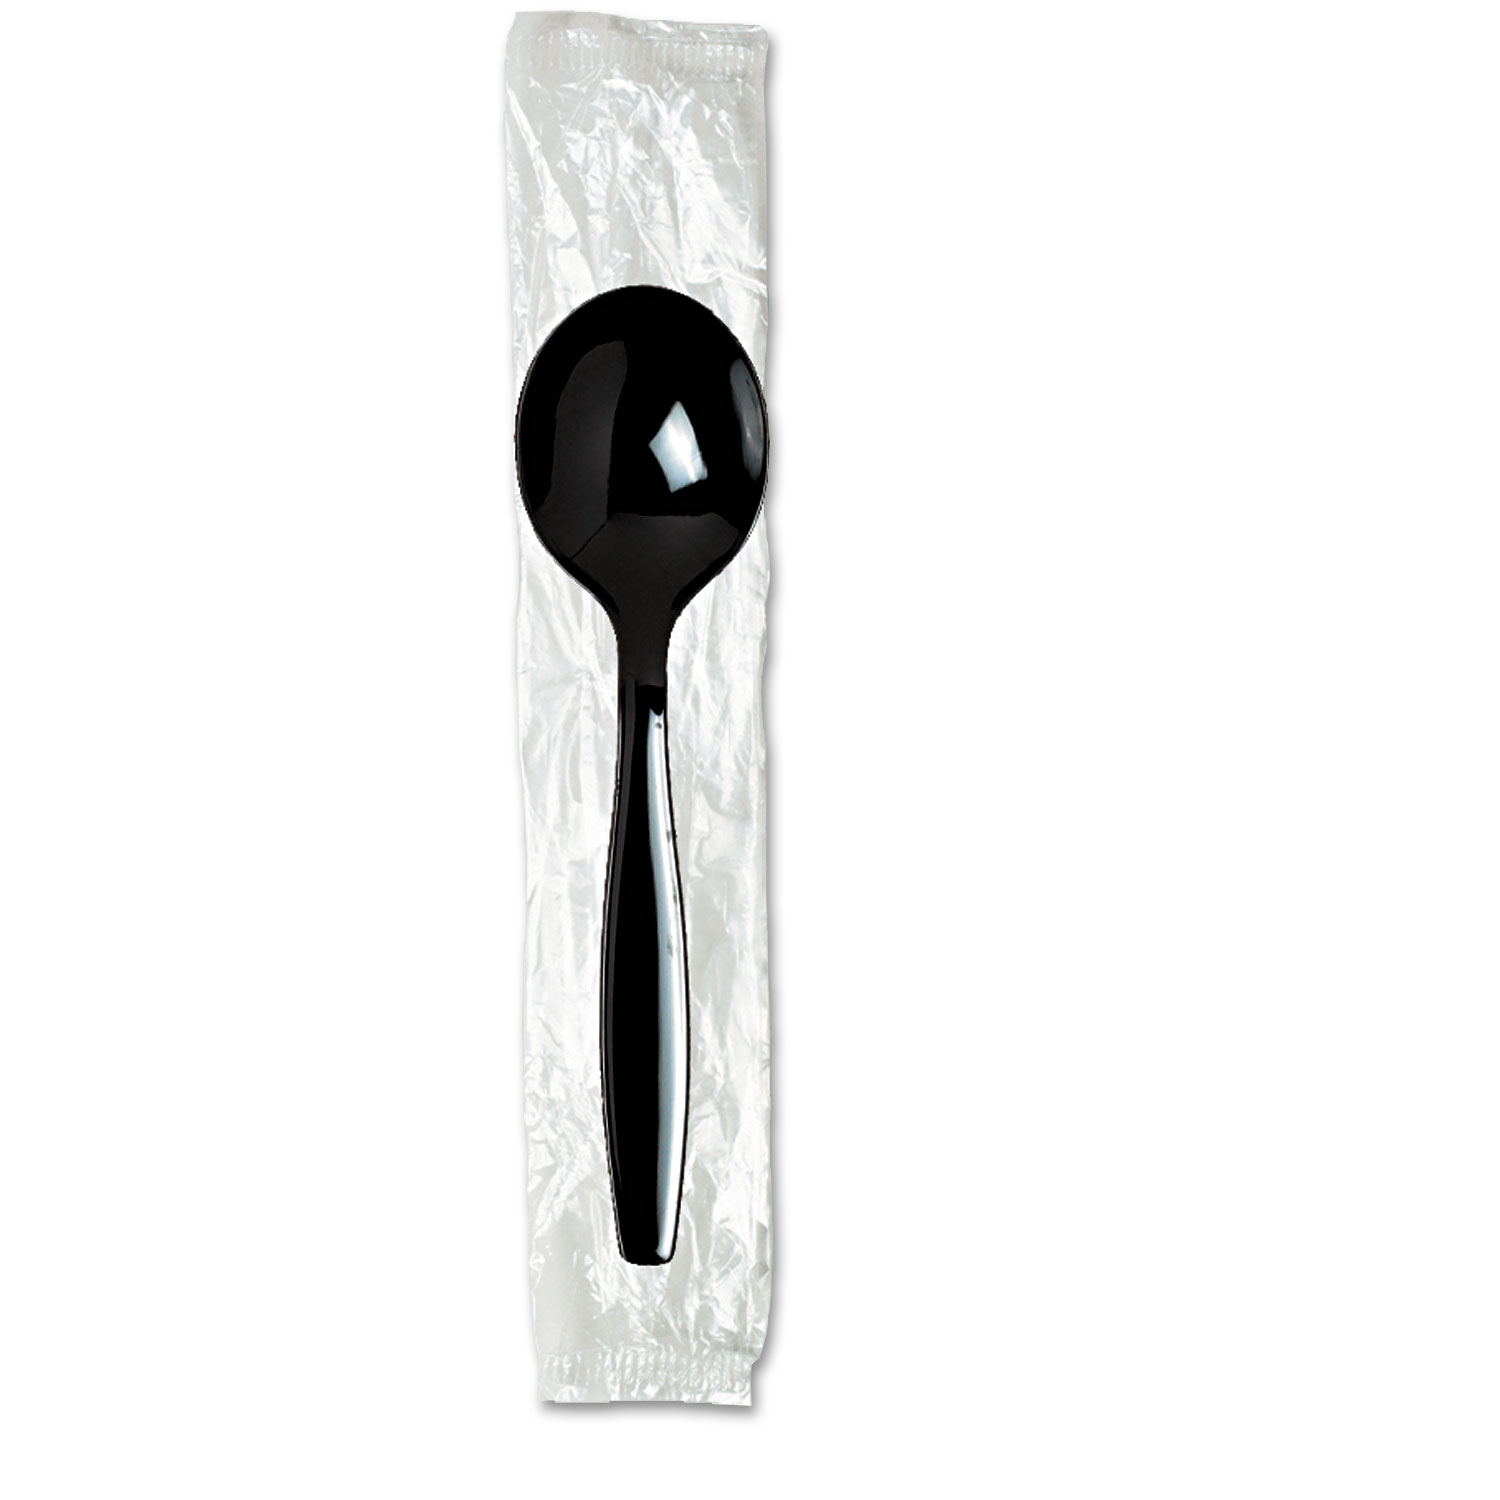 Individually Wrapped Spoons, Plastic, Black, 1000/Carton